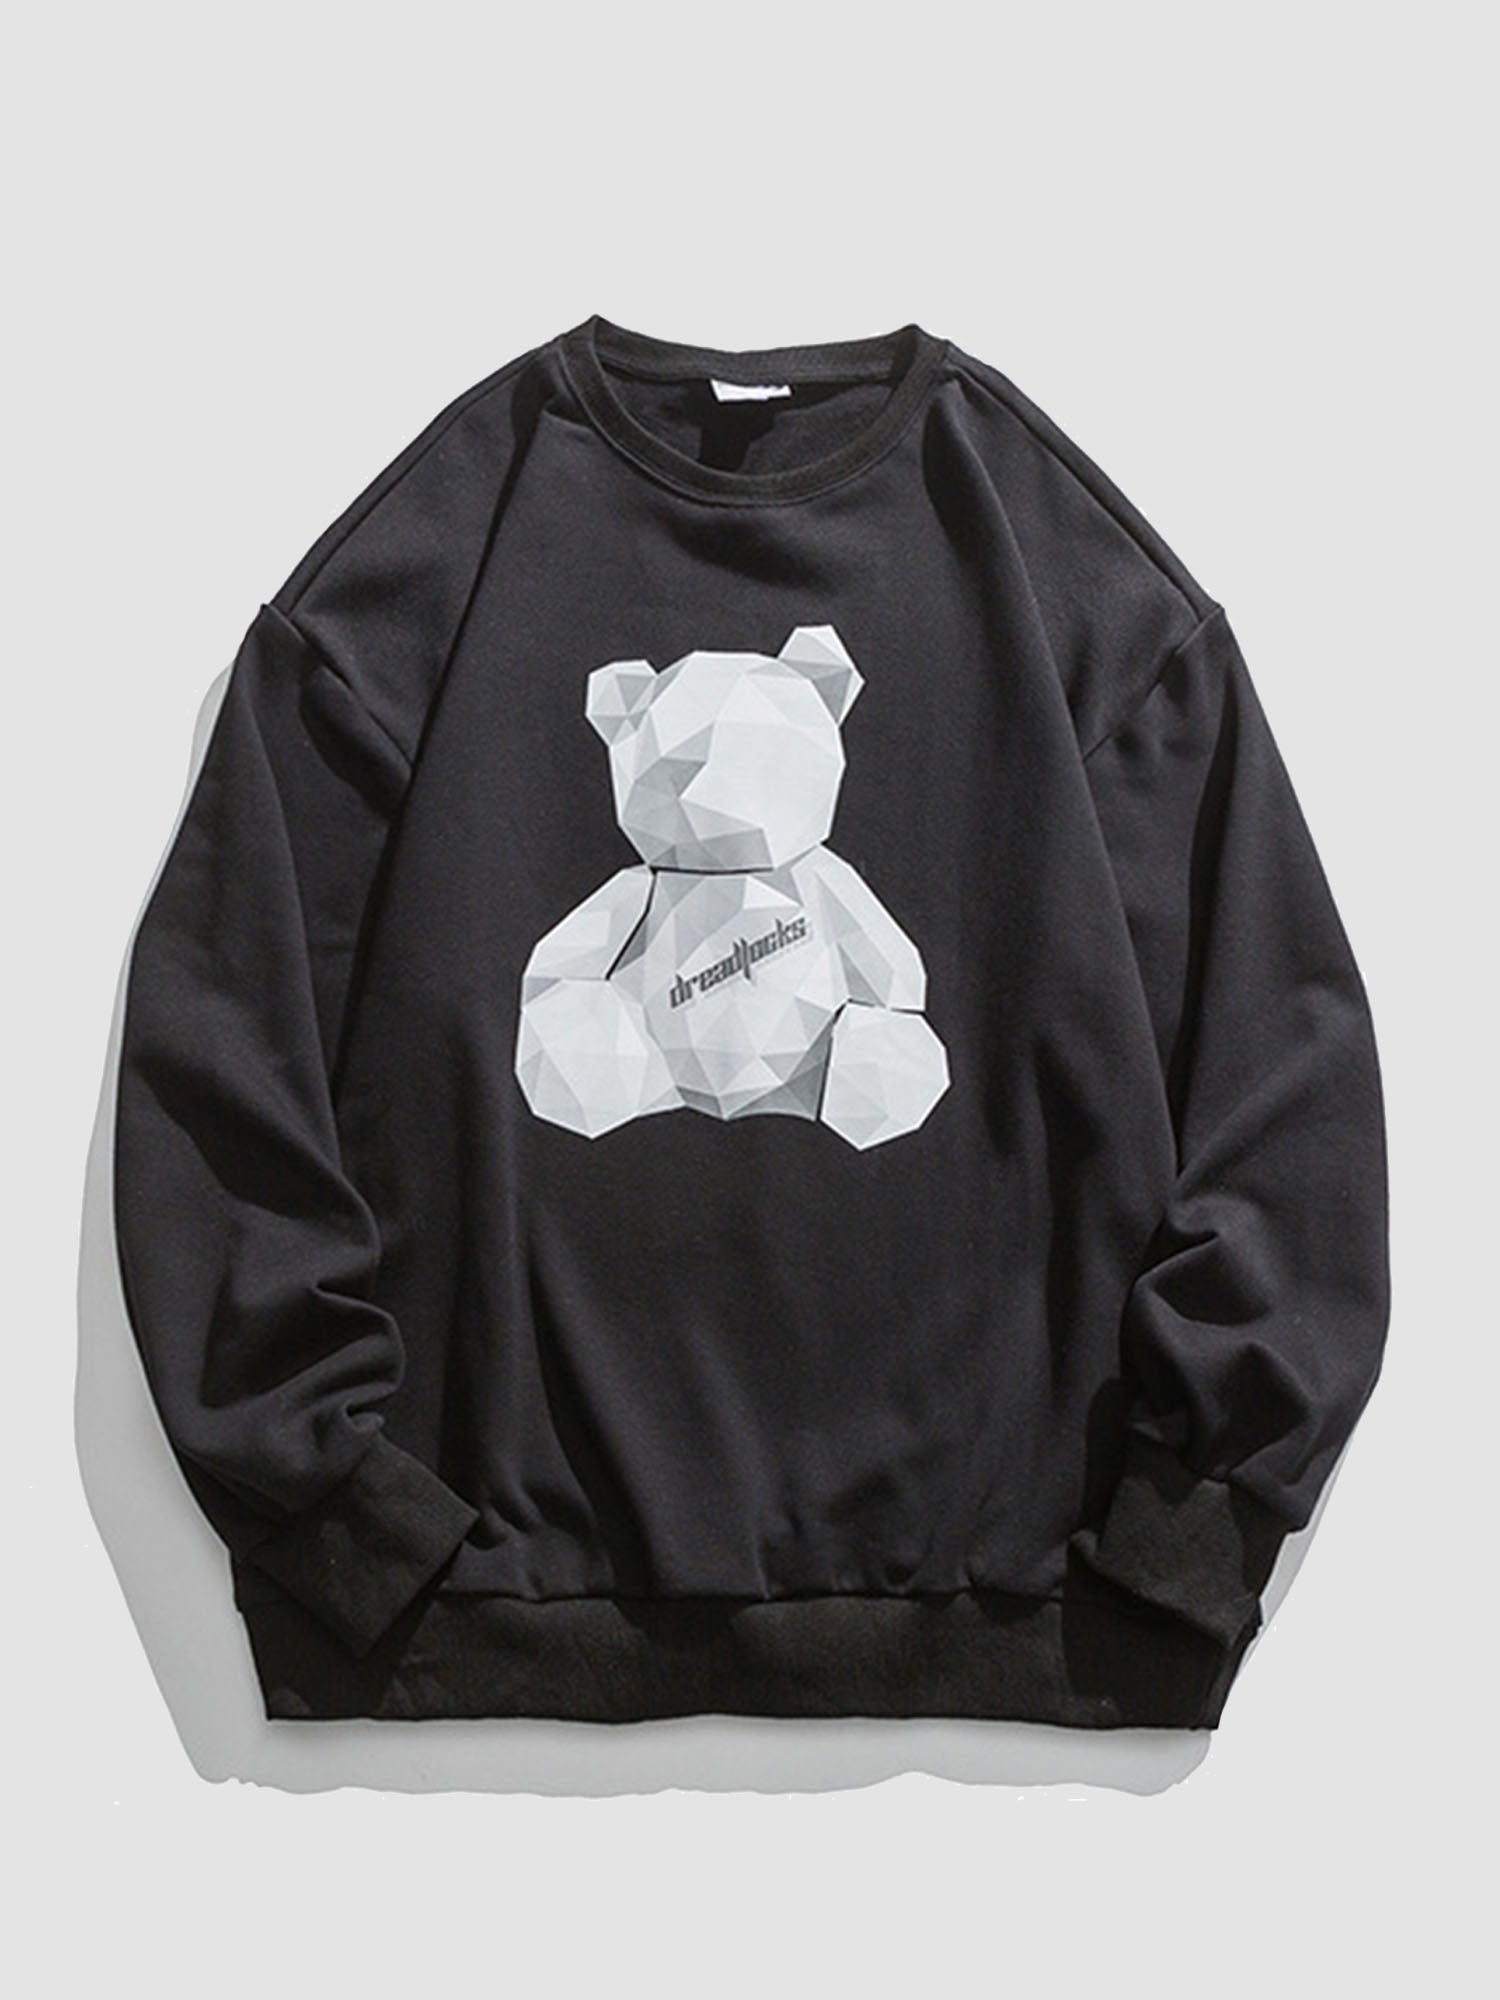 JUSTNOTAG Geometric Cartoon Bear Picture Sweatshirts